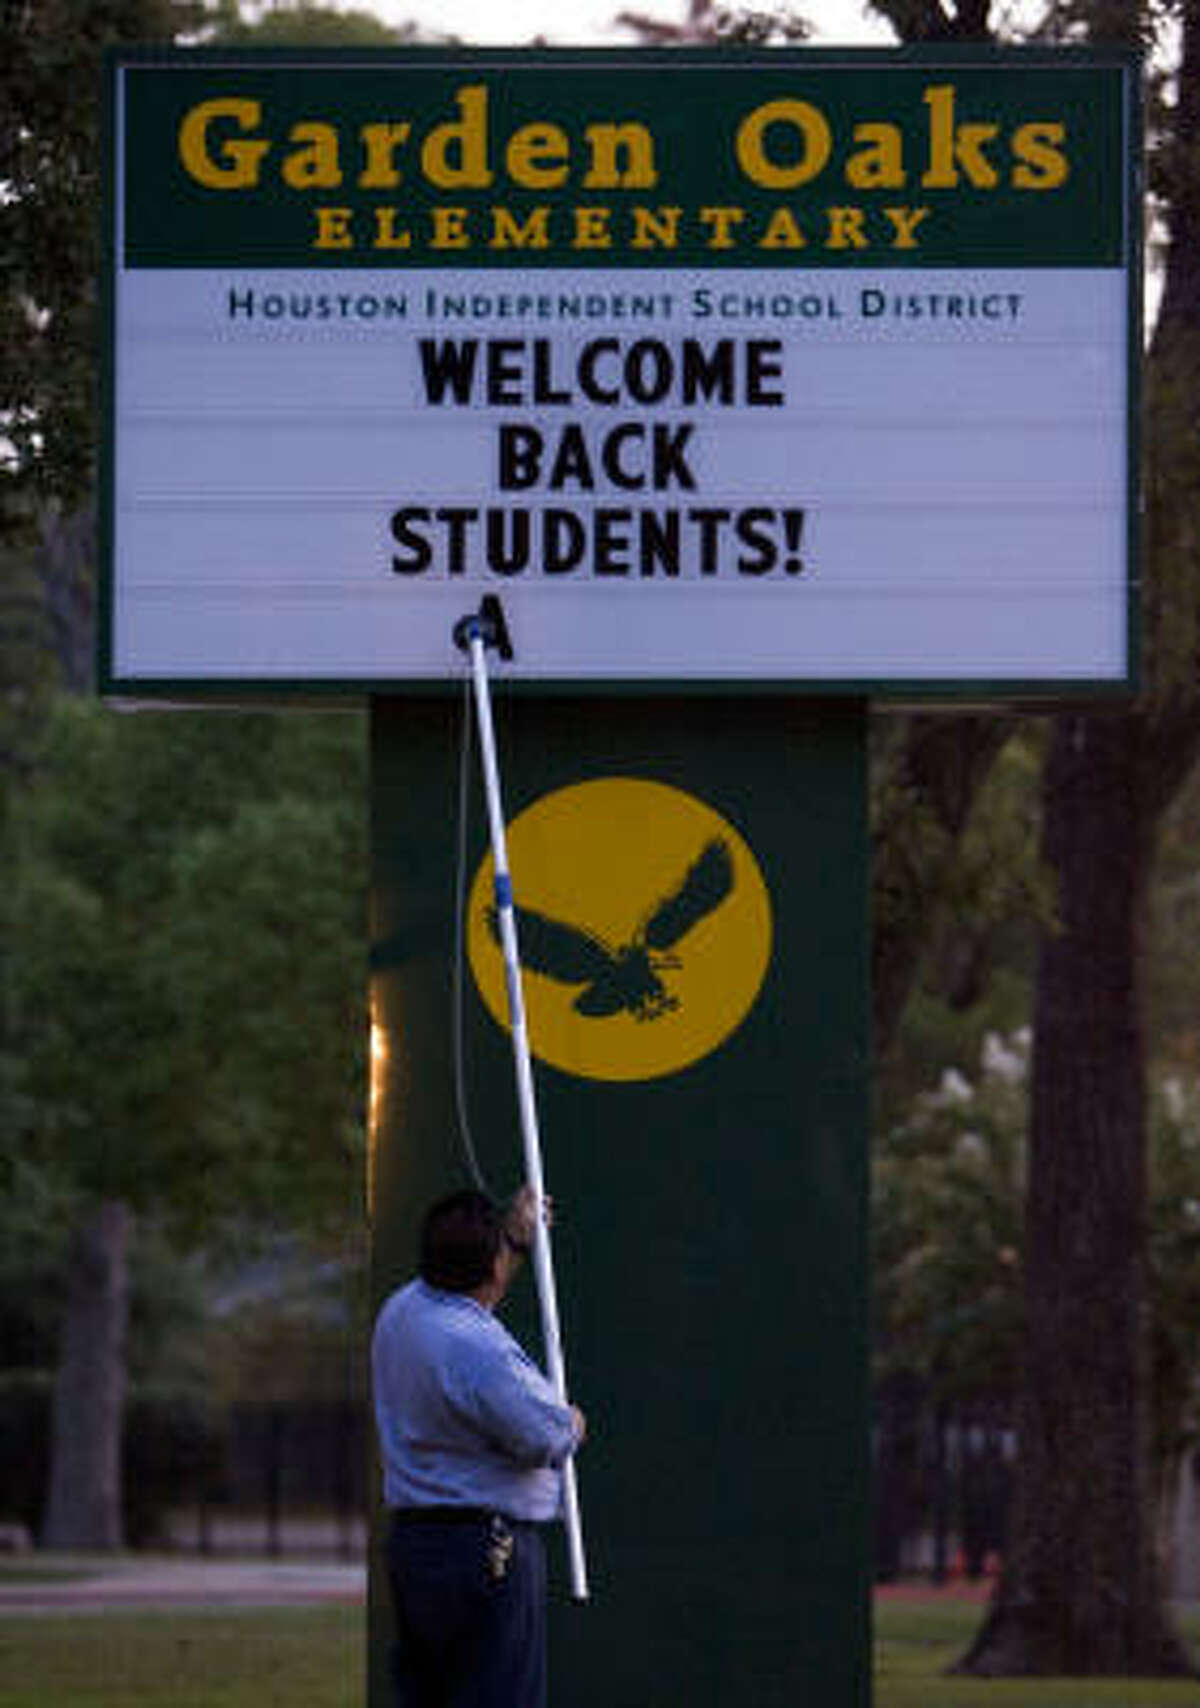 Antonio Vivar gets ready for the students at Garden Oaks Elementary in Houston.